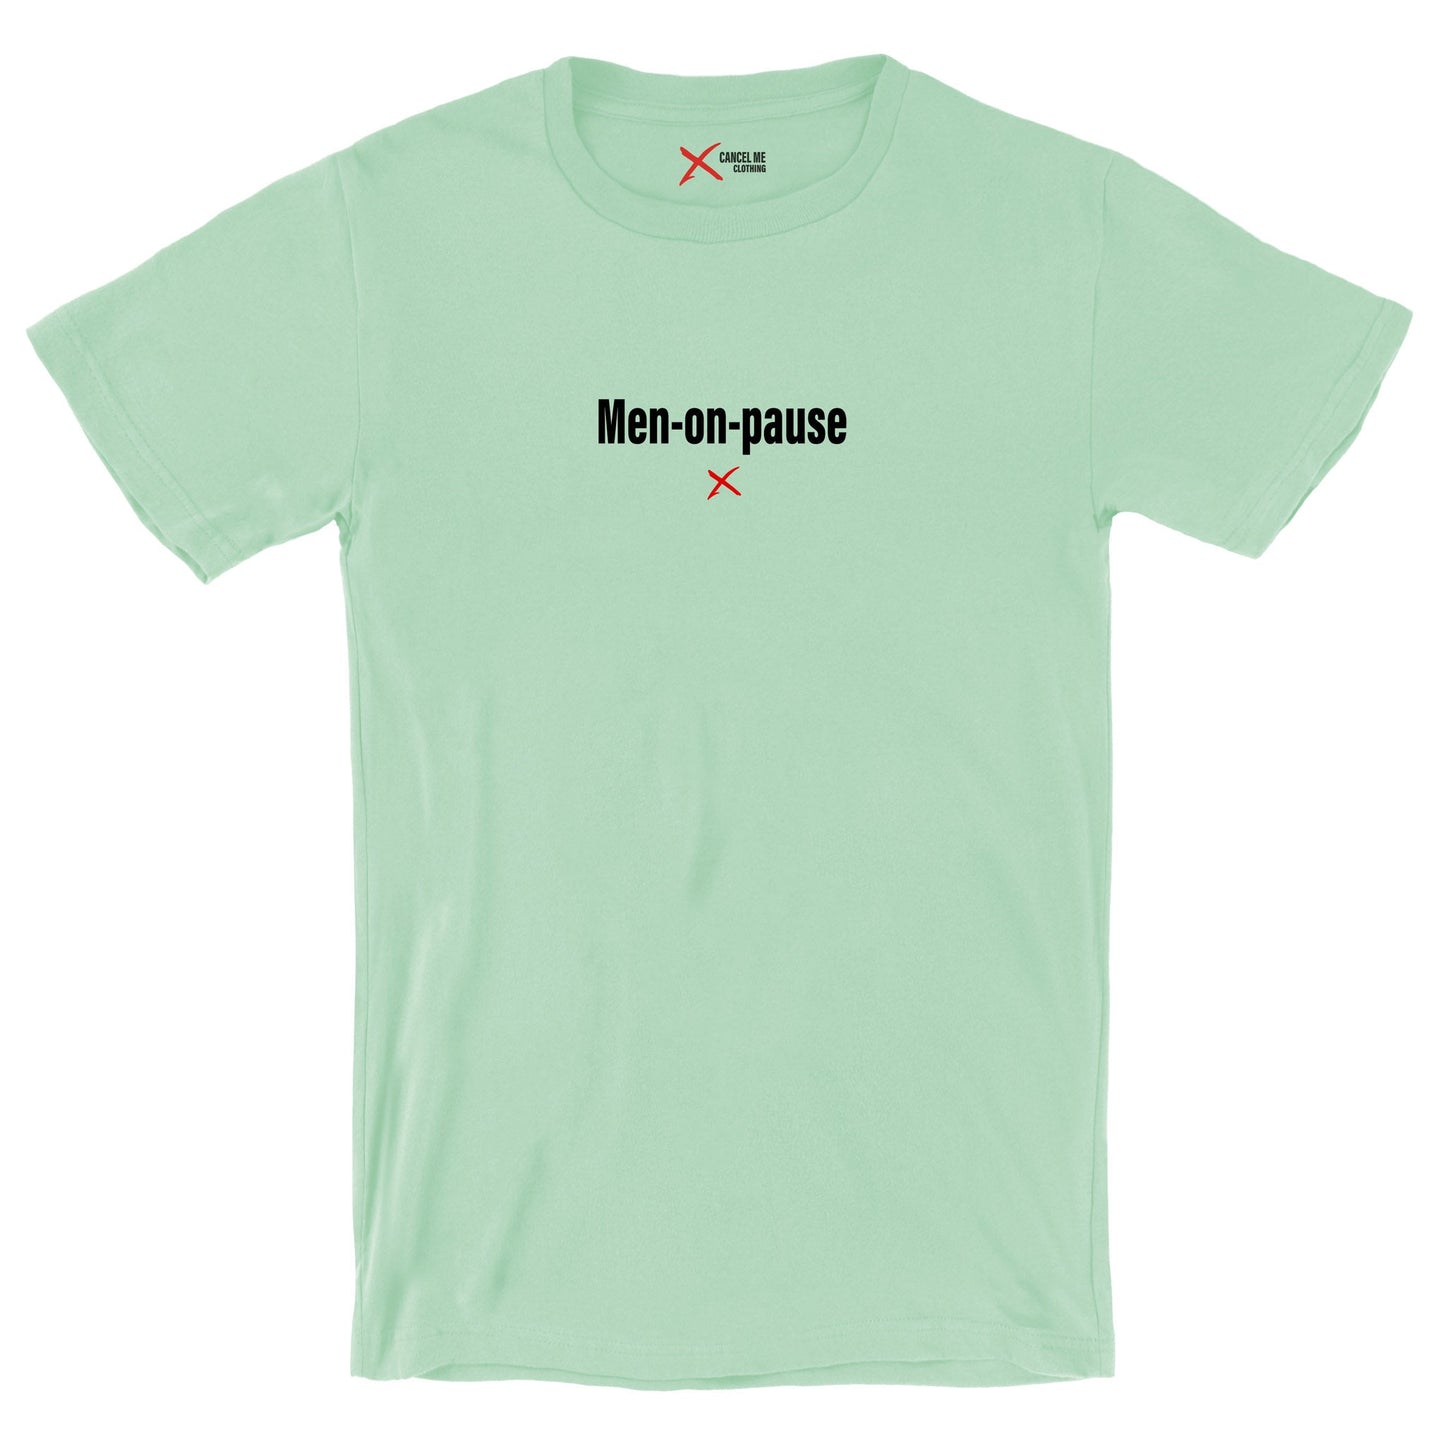 Men-on-pause - Shirt